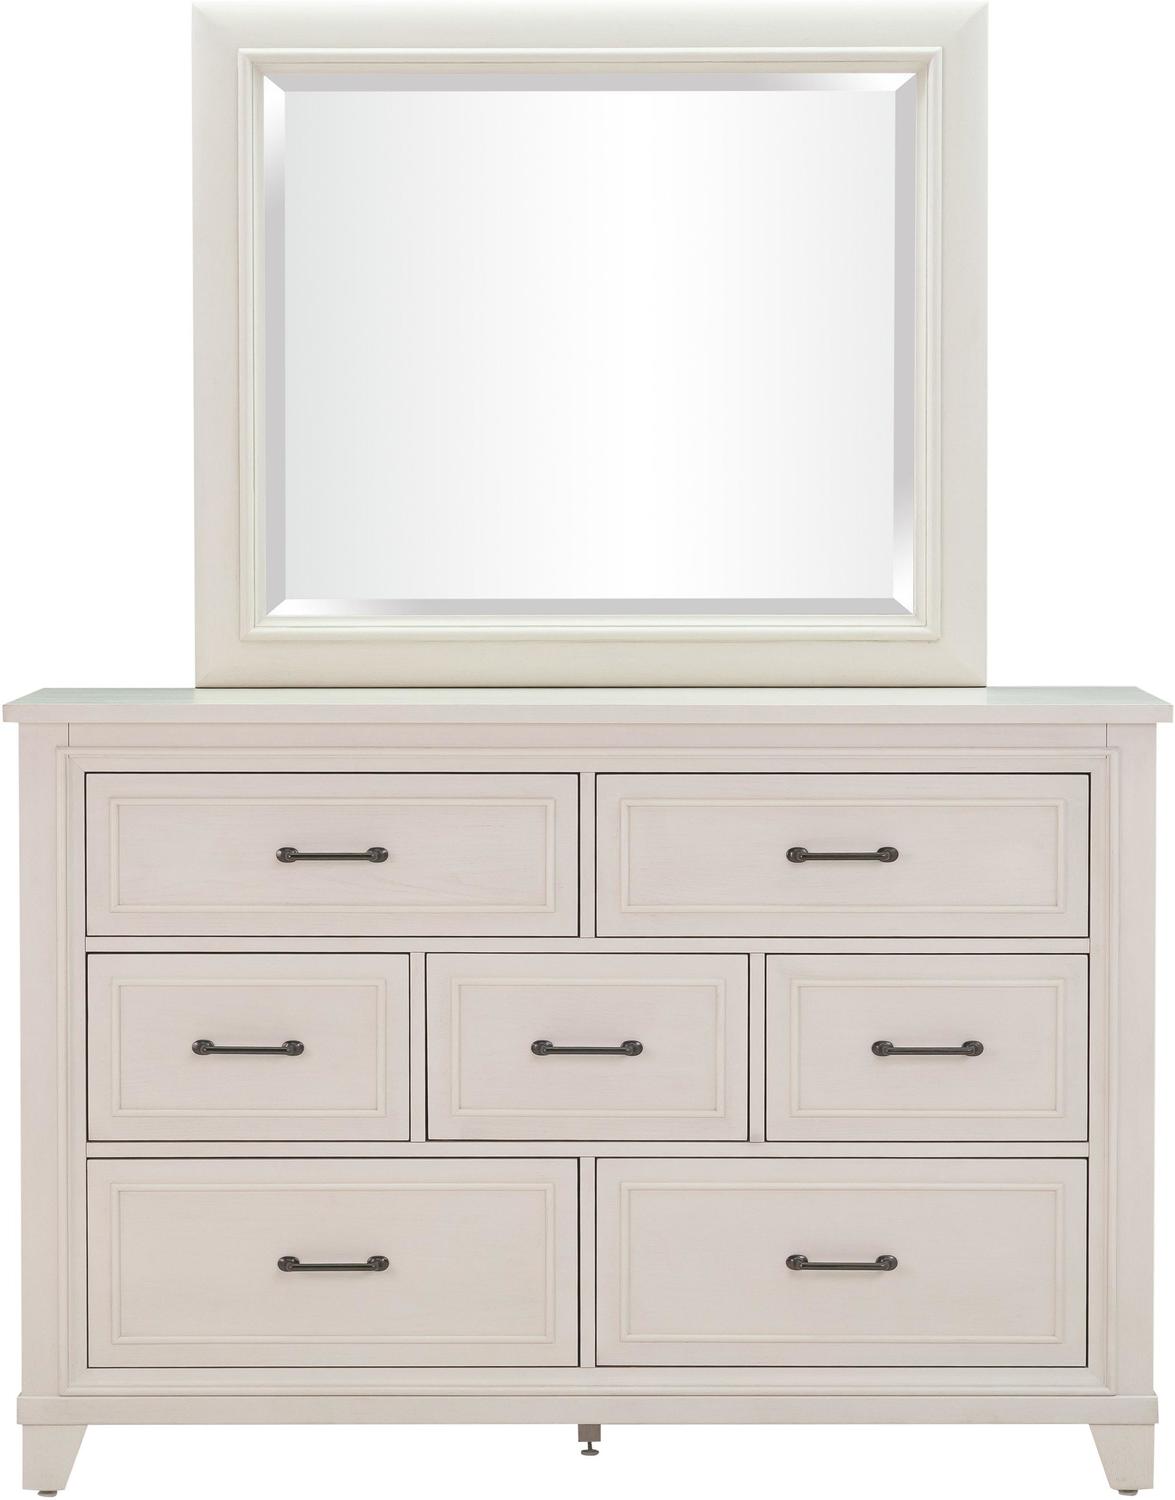 oval mirror silver frame Tov Furniture Mirrors Mirrors White